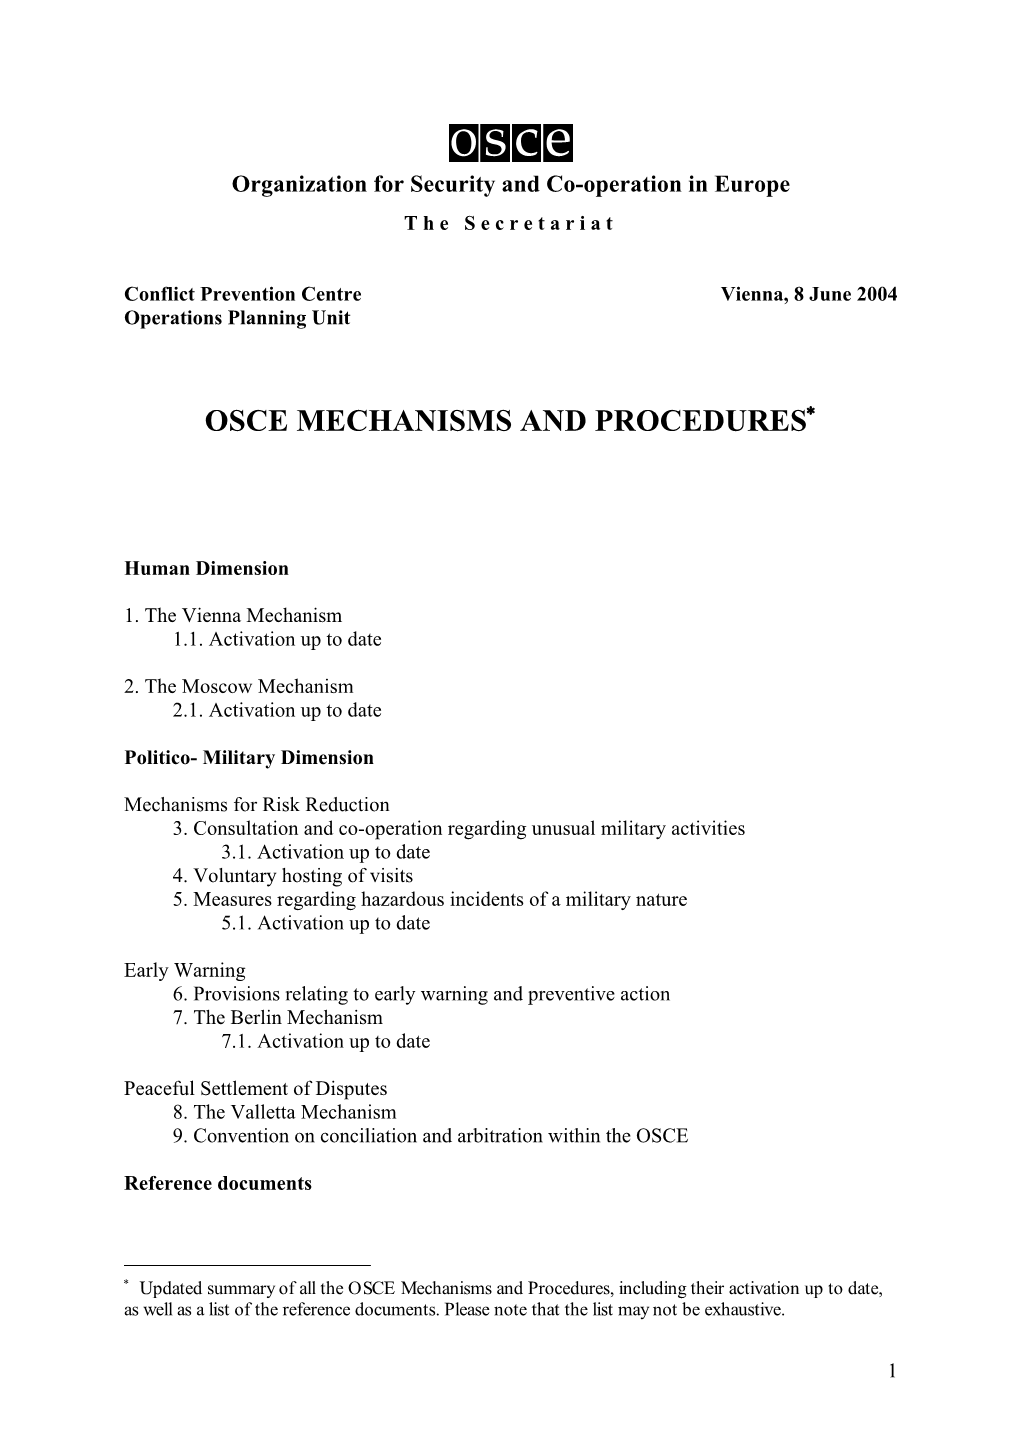 Osce Mechanisms and Procedures